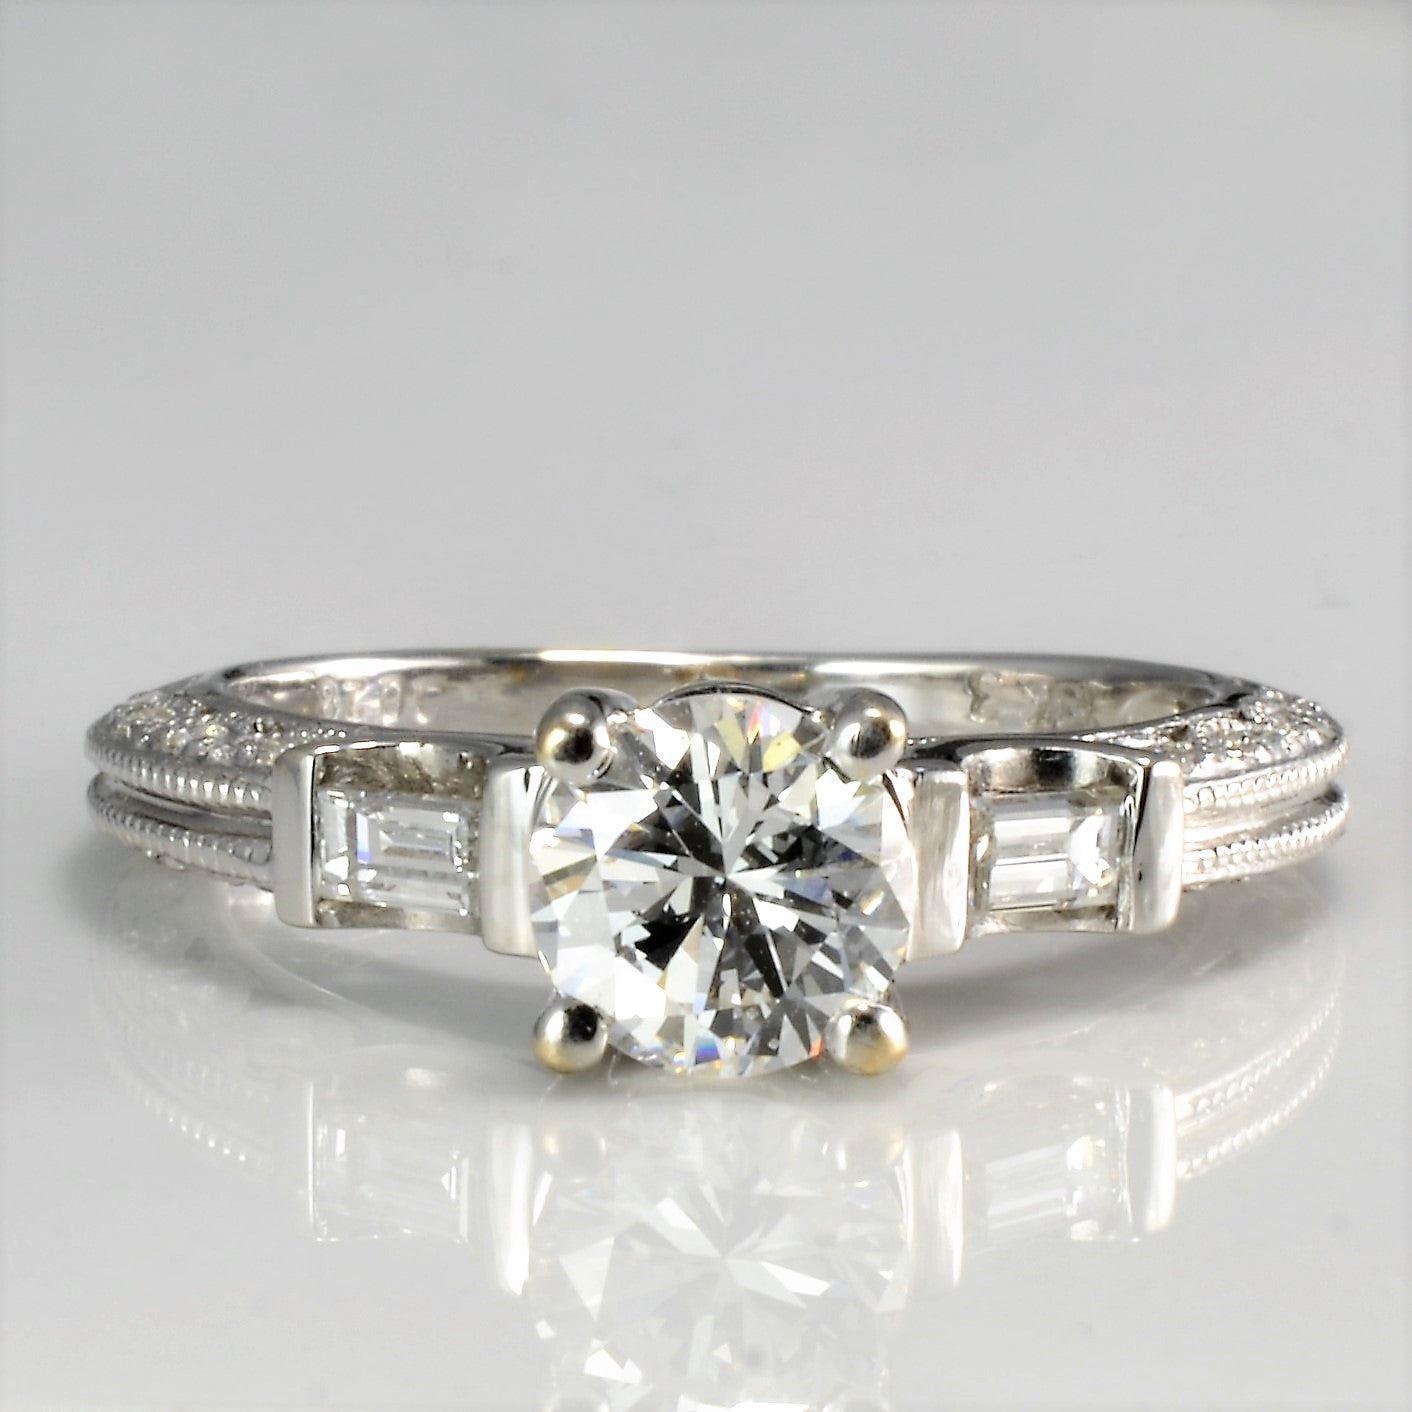 Round Brilliant Engagement Ring With Baguette Accents | 1.04 ctw | SZ 4.75|